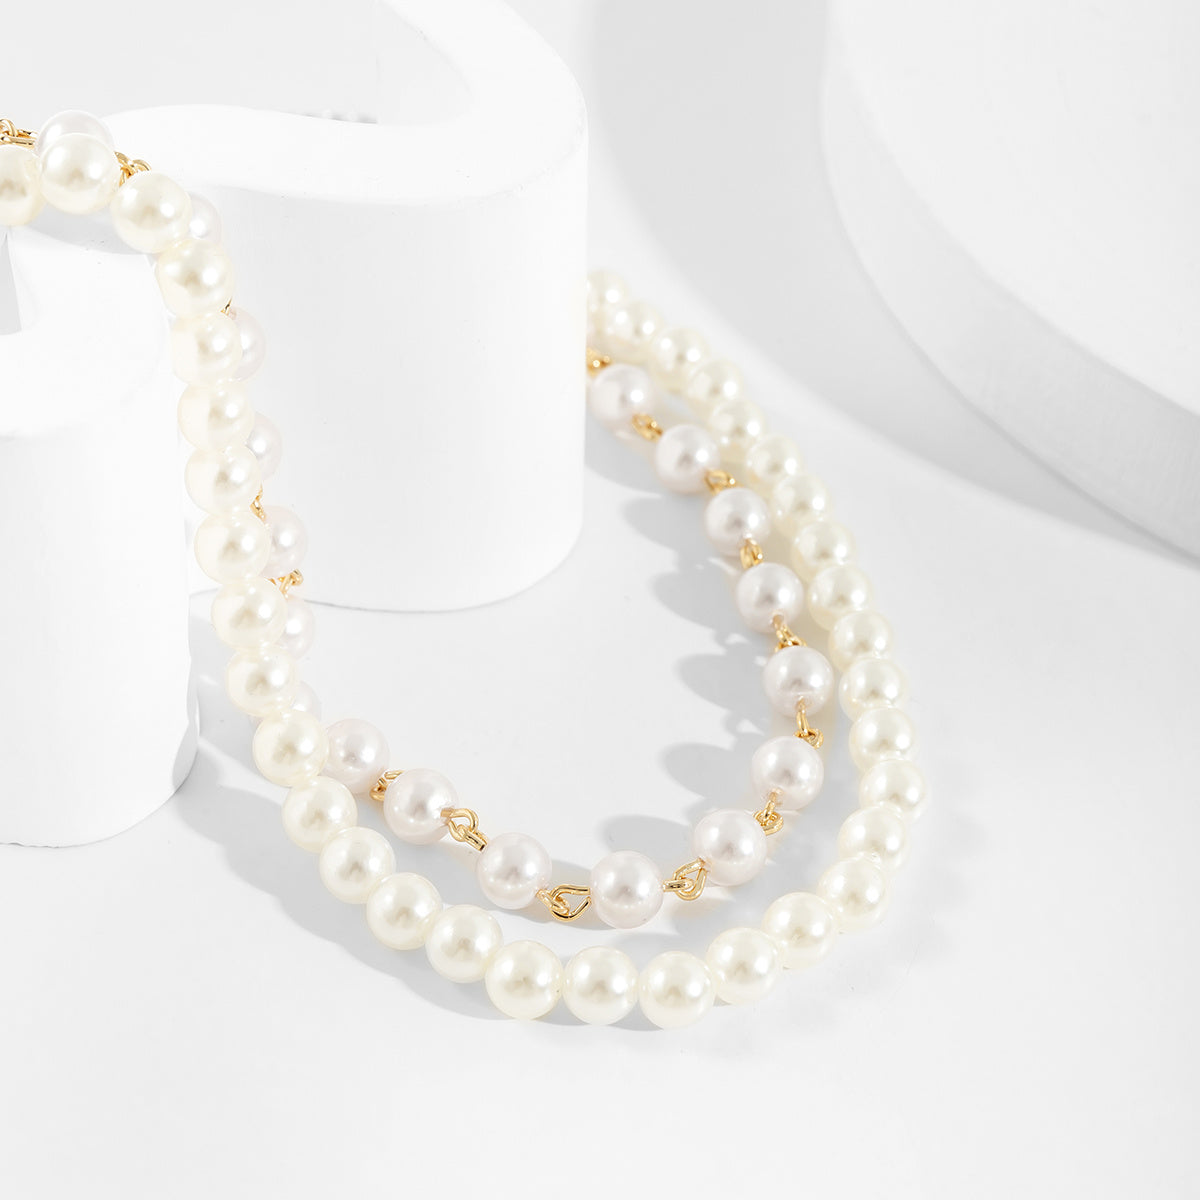 2pcs Fashion Elegant Simple Pearl Necklaces Ladies Casual Wedding Party Friendship Pearl Necklaces